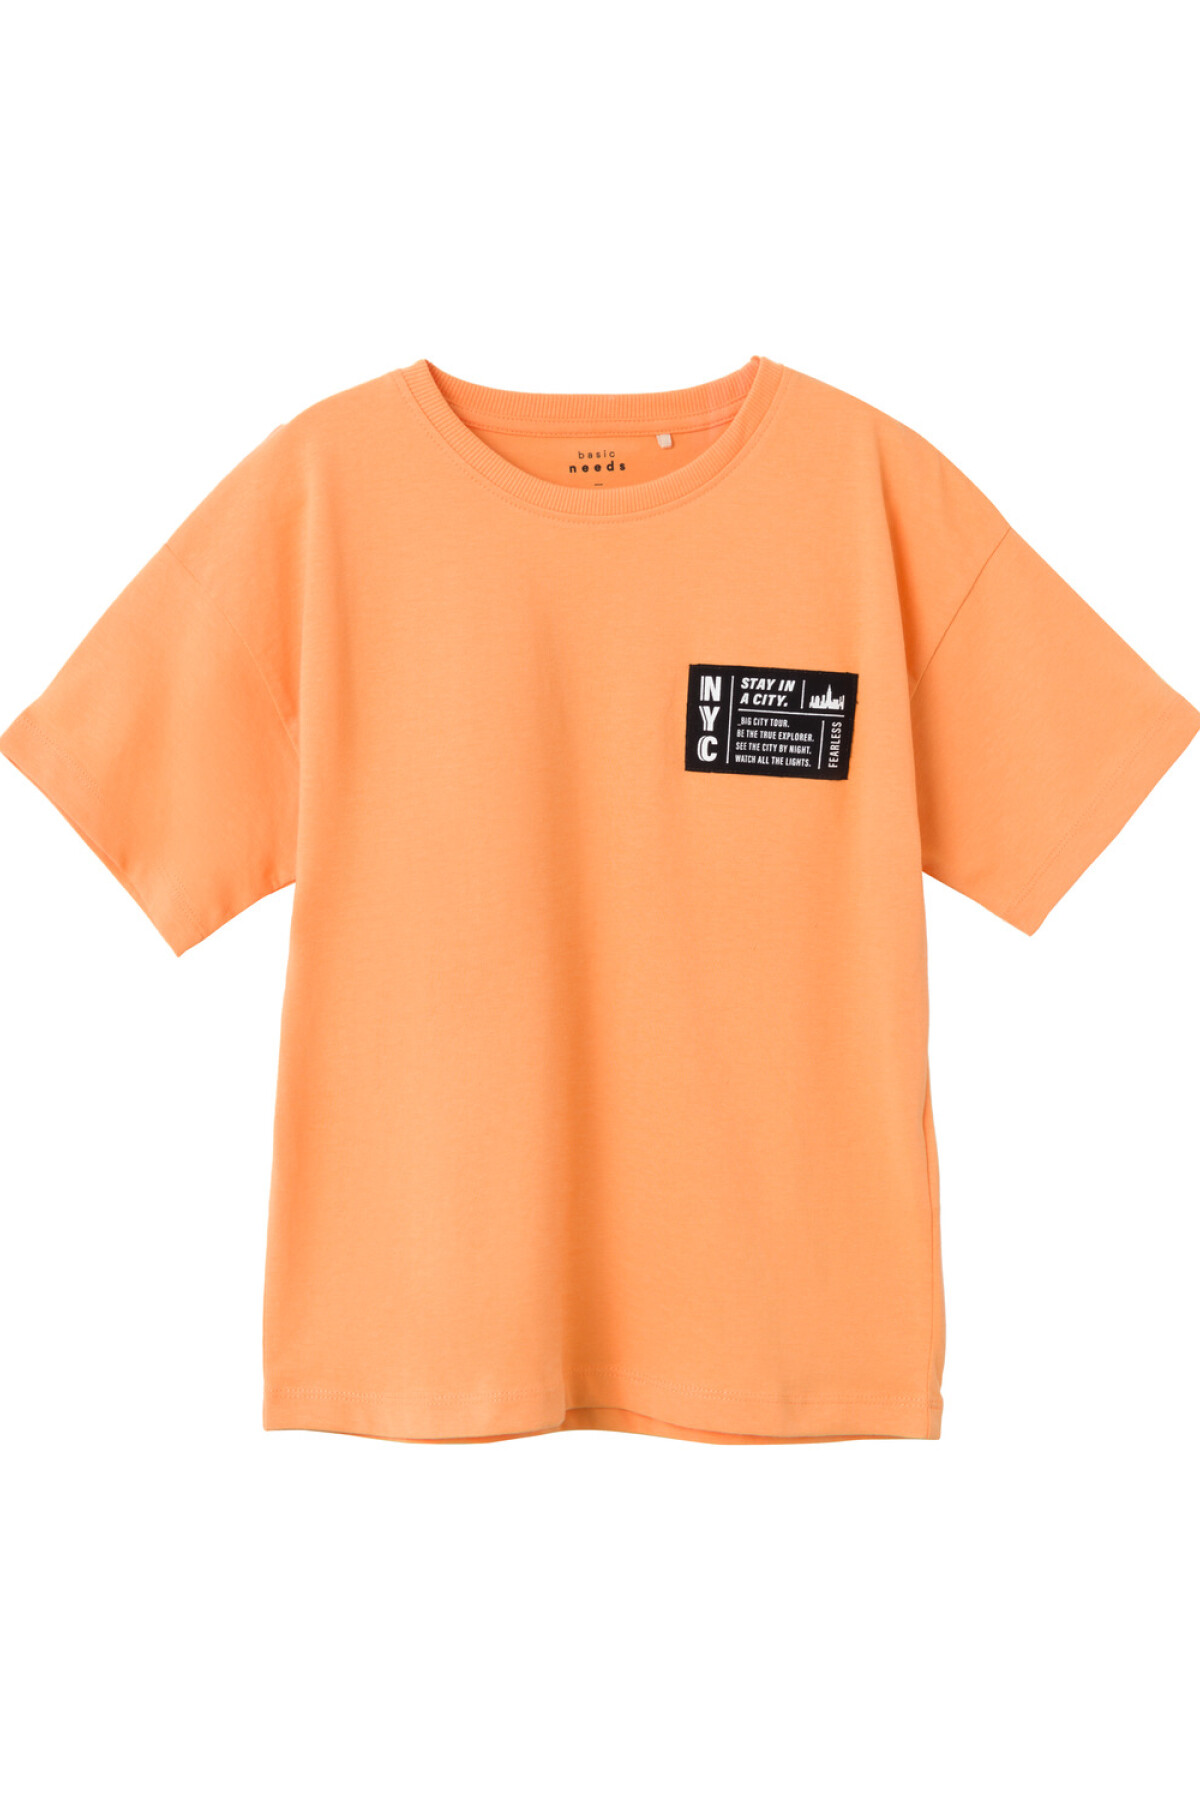 Camiseta Vector Kids Mock Orange